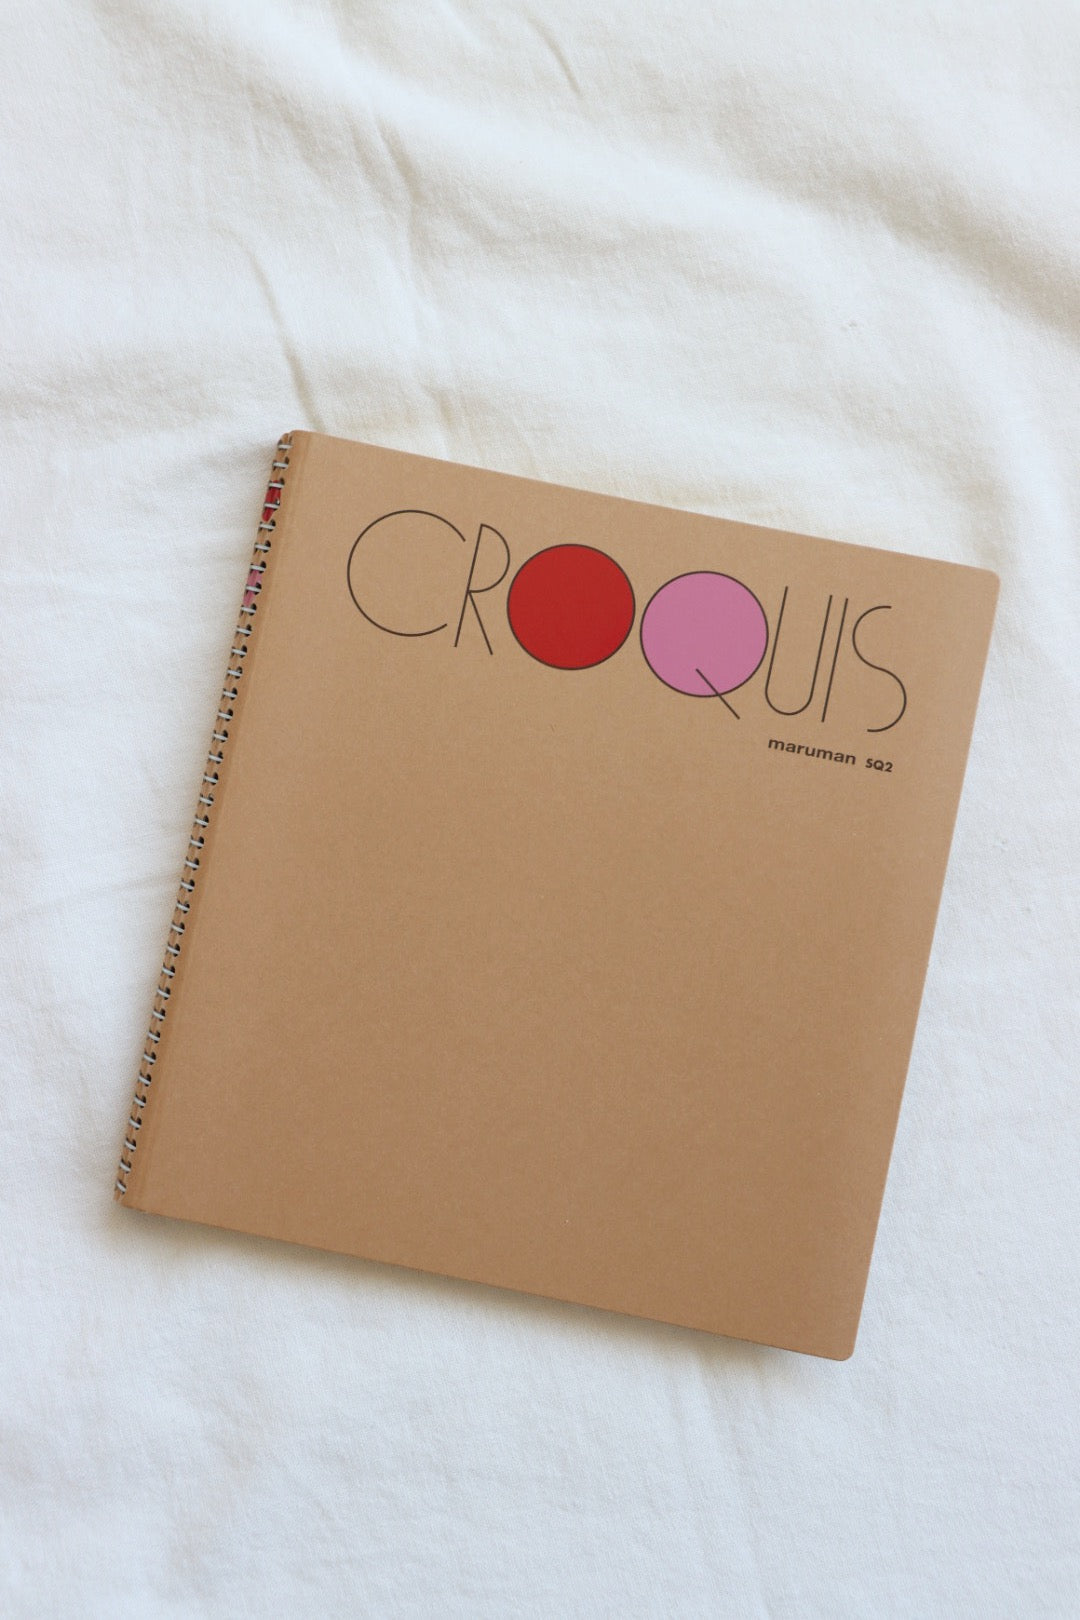 Croquis Square Sketch Book